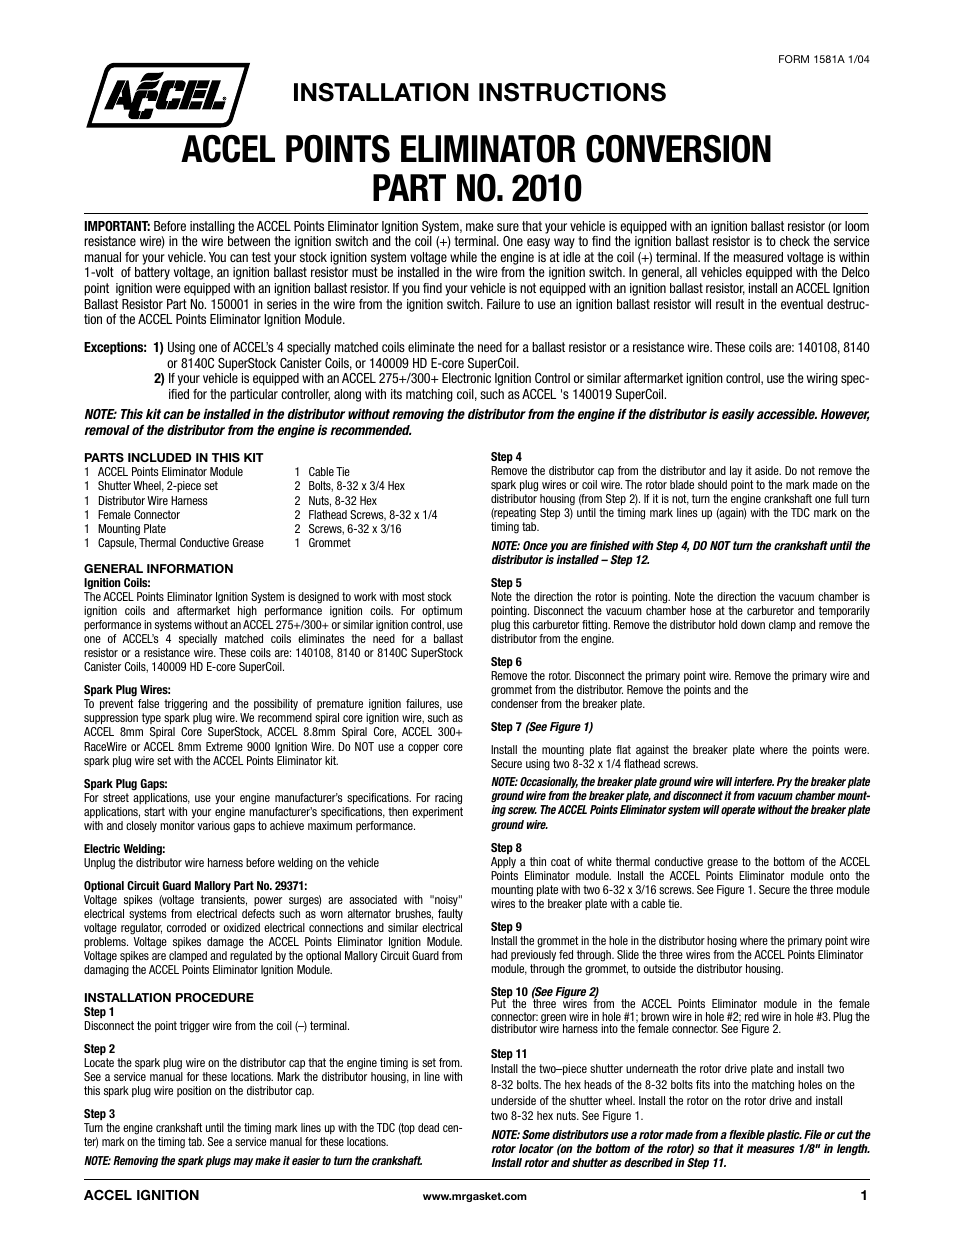 ACCEL 2010 Point Eliminator Kit